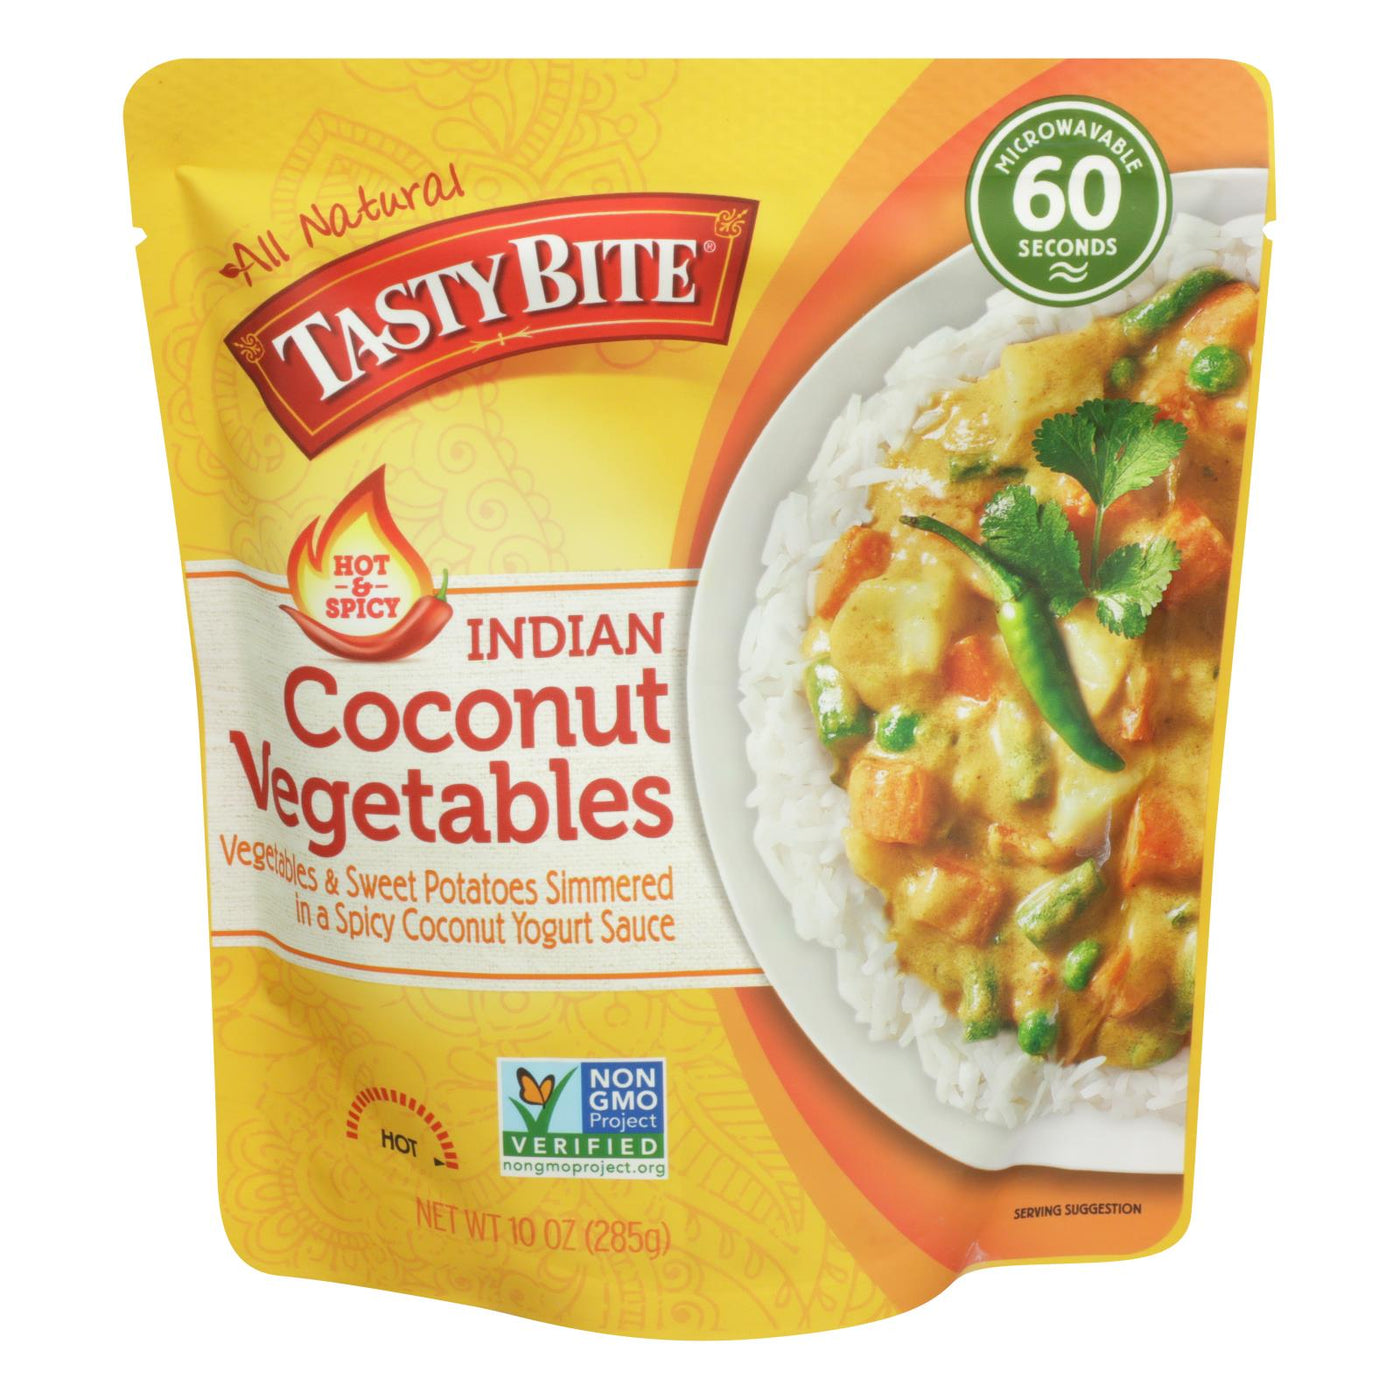 Tasty Bite Heat & Eat Indian Cuisine Entr?e - Hot & Spicy Coconut Vegetables - Case Of 6 - 10 Oz | OnlyNaturals.us